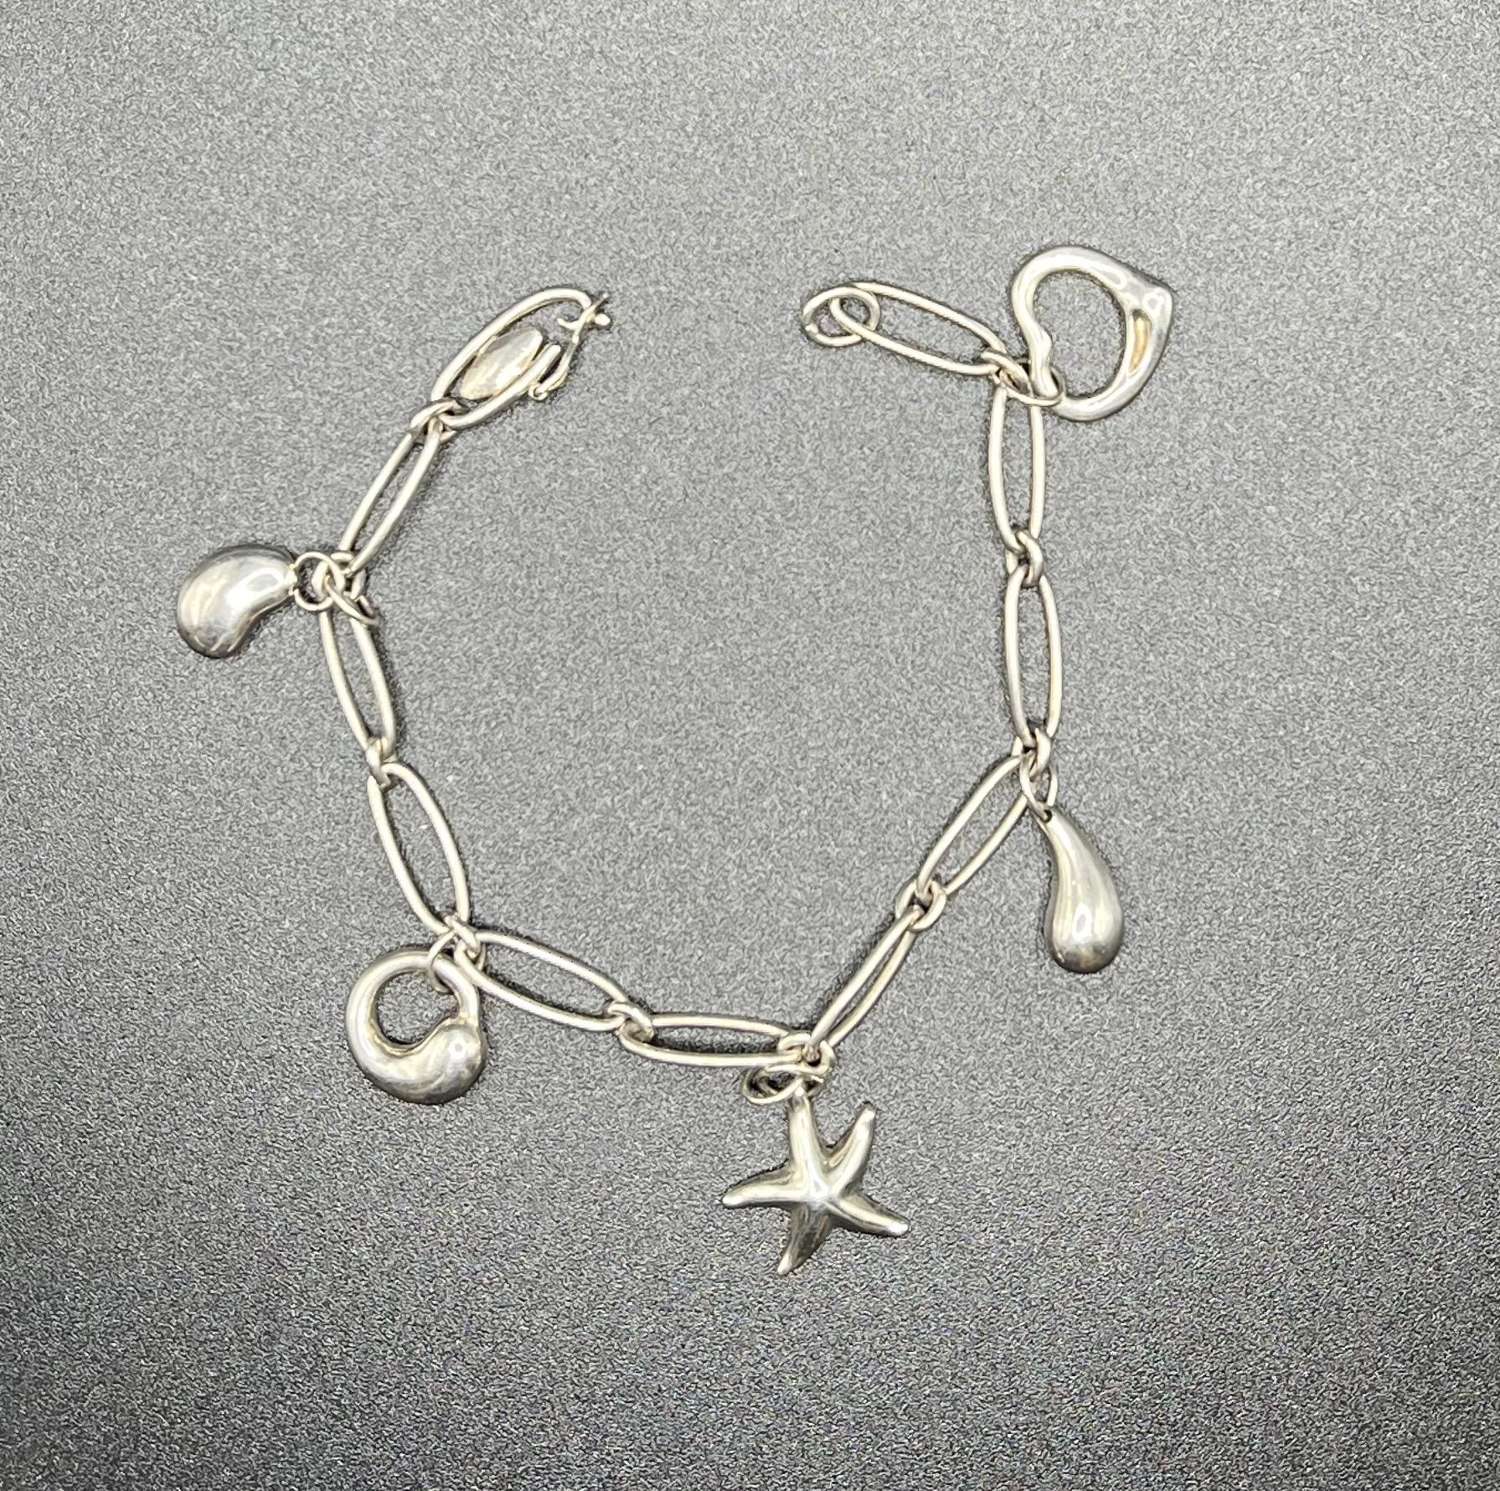 Tiffany & Co. Silver Charm Bracelet